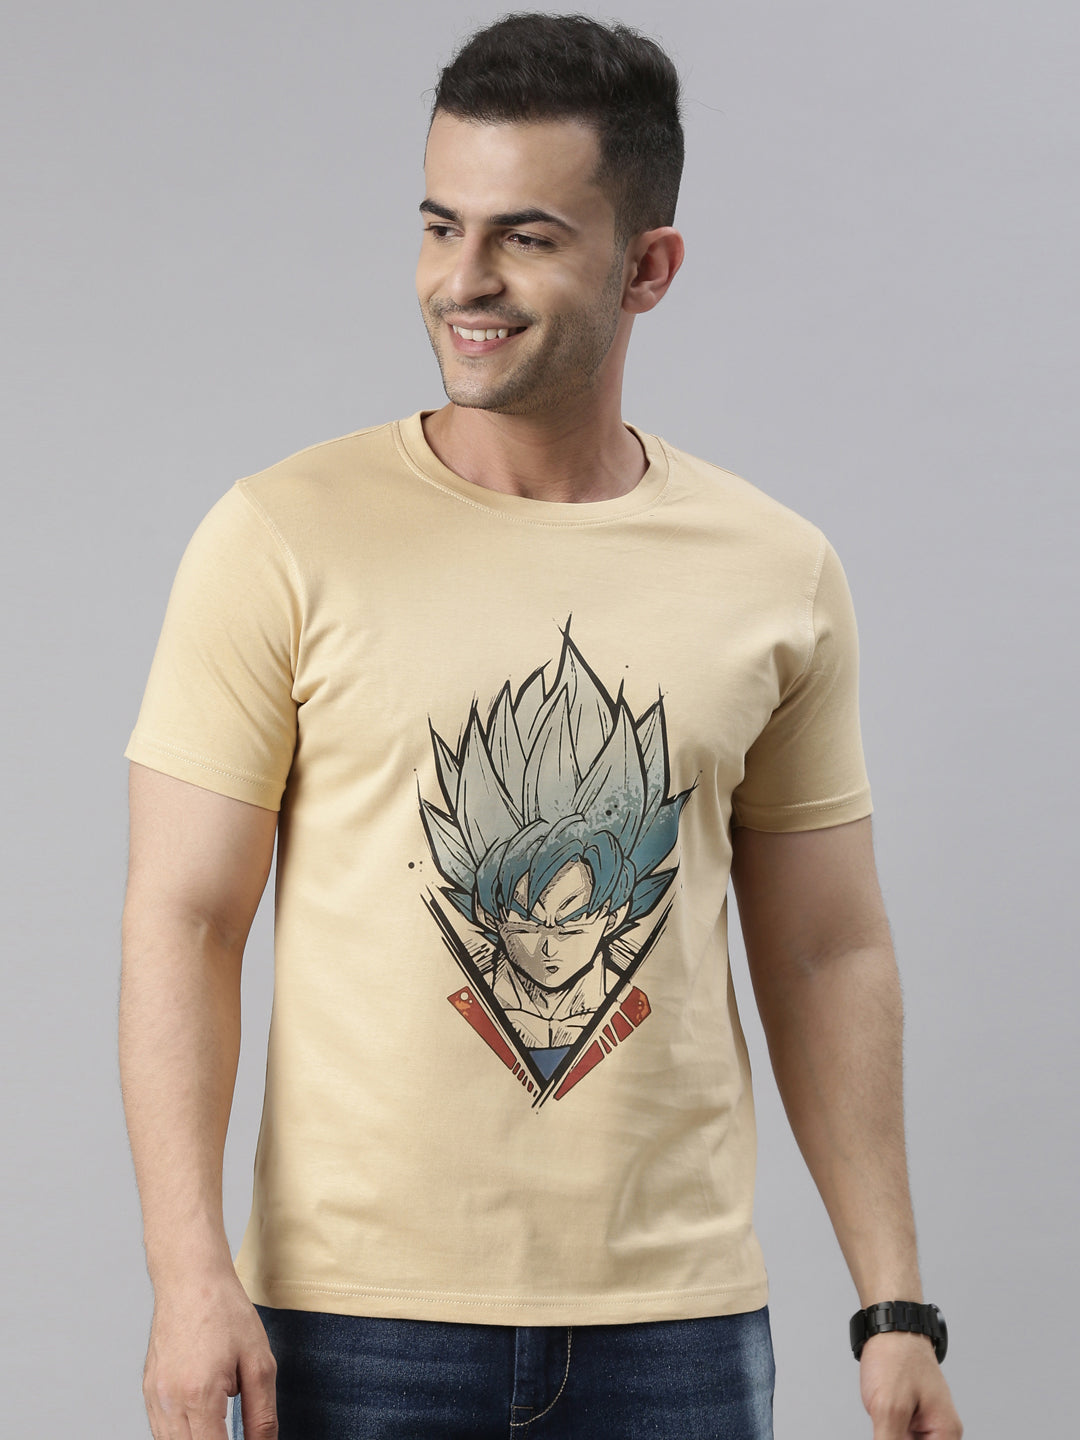 Goku - Dragon Ball Z Anime T-Shirt Graphic T-Shirts Bushirt   